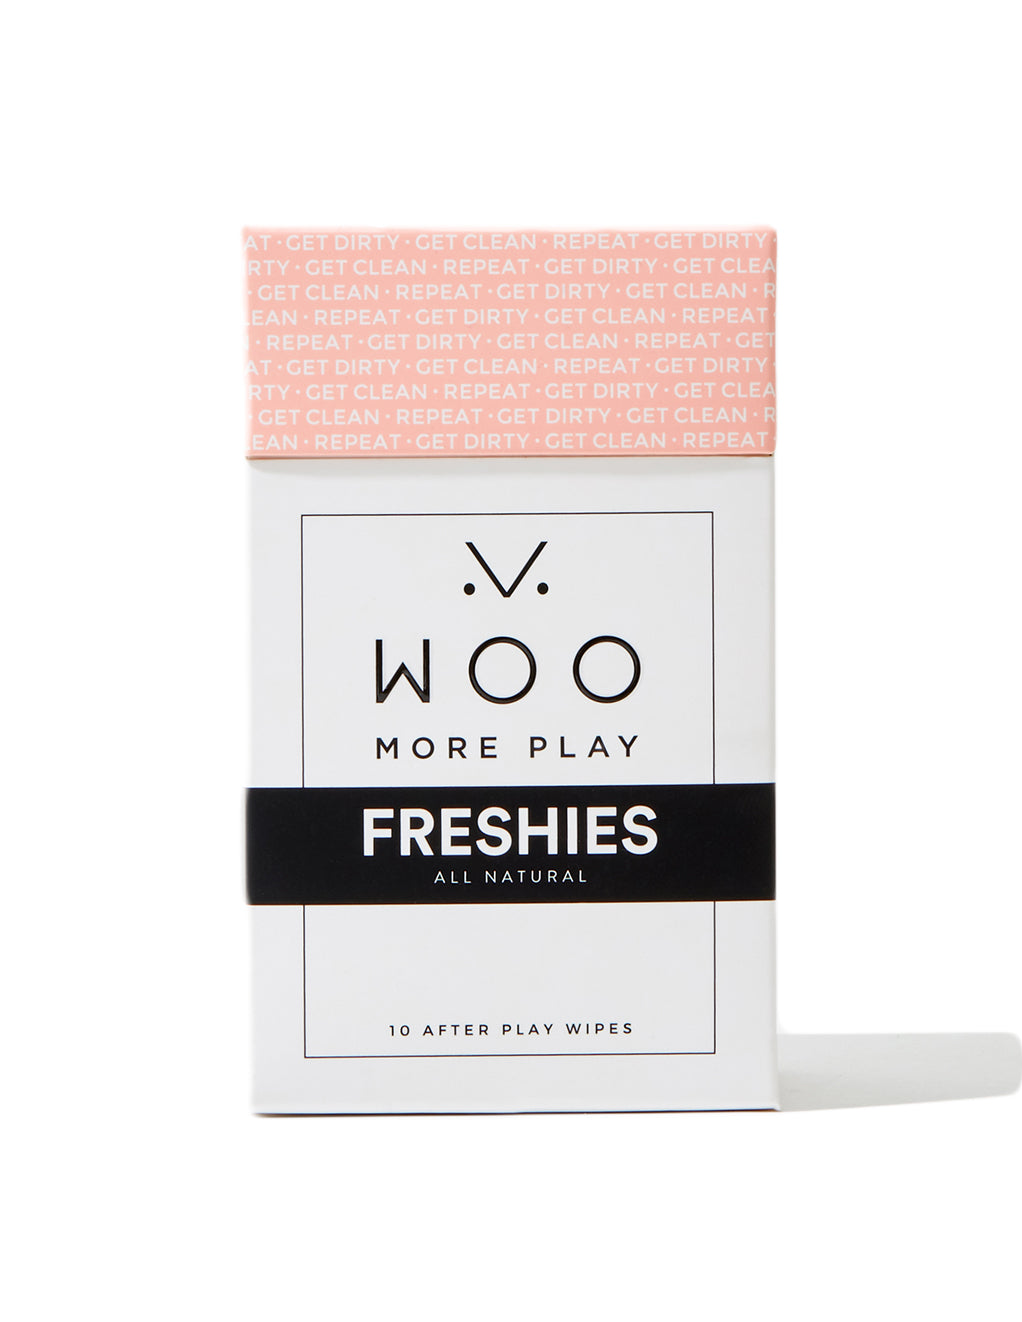 Woo More Play Freshies- Package